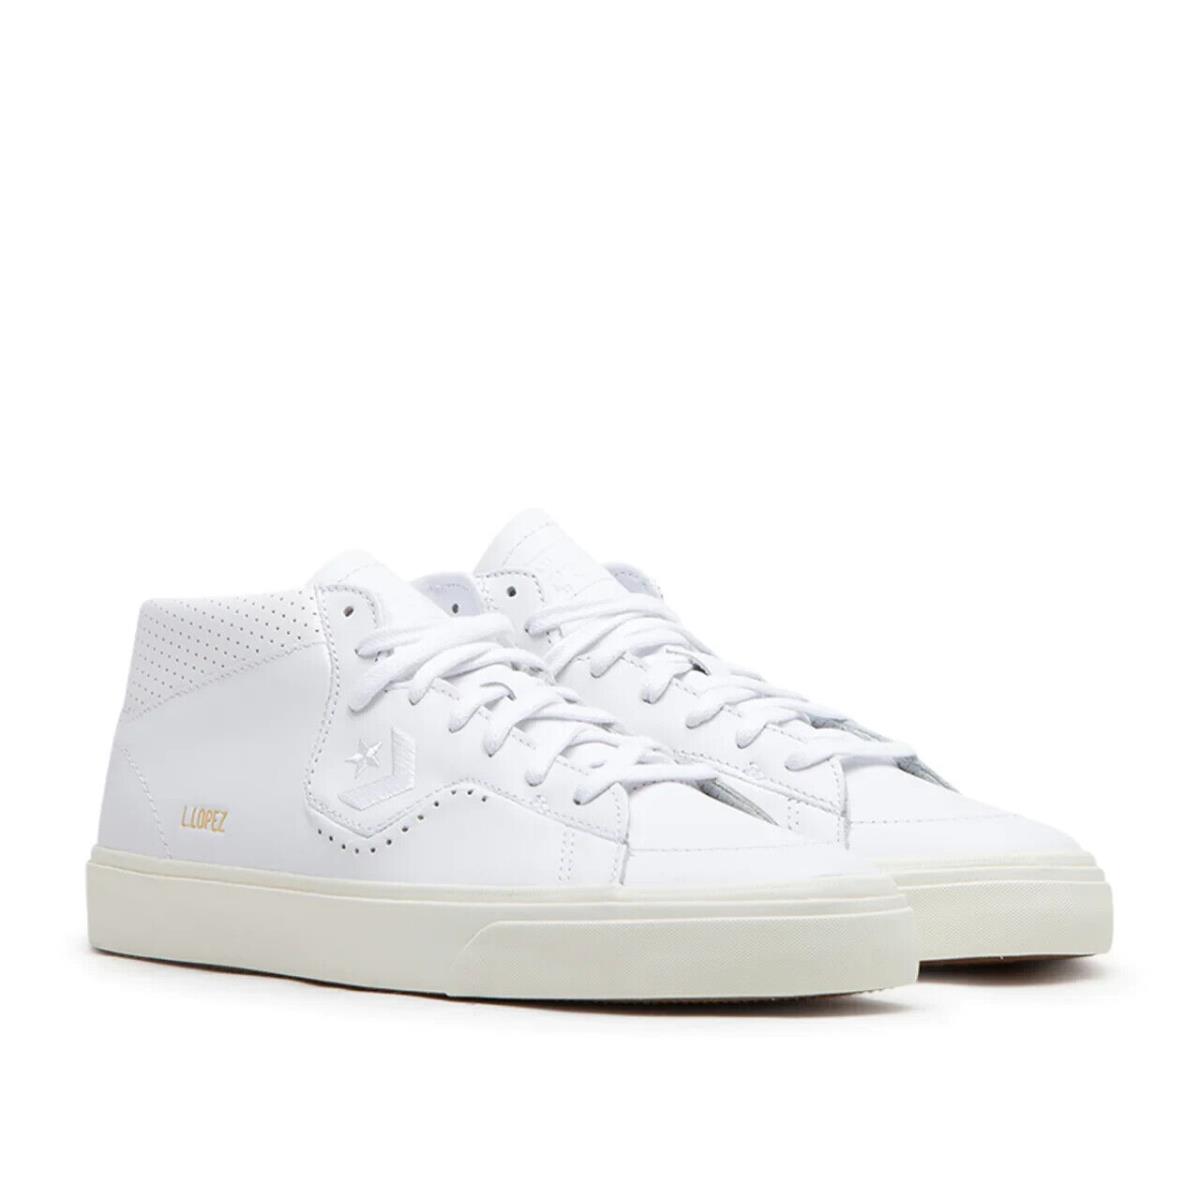 Converse Cons Louie Lopez Pro Mid Leather White A05090C Skate Shoes - White